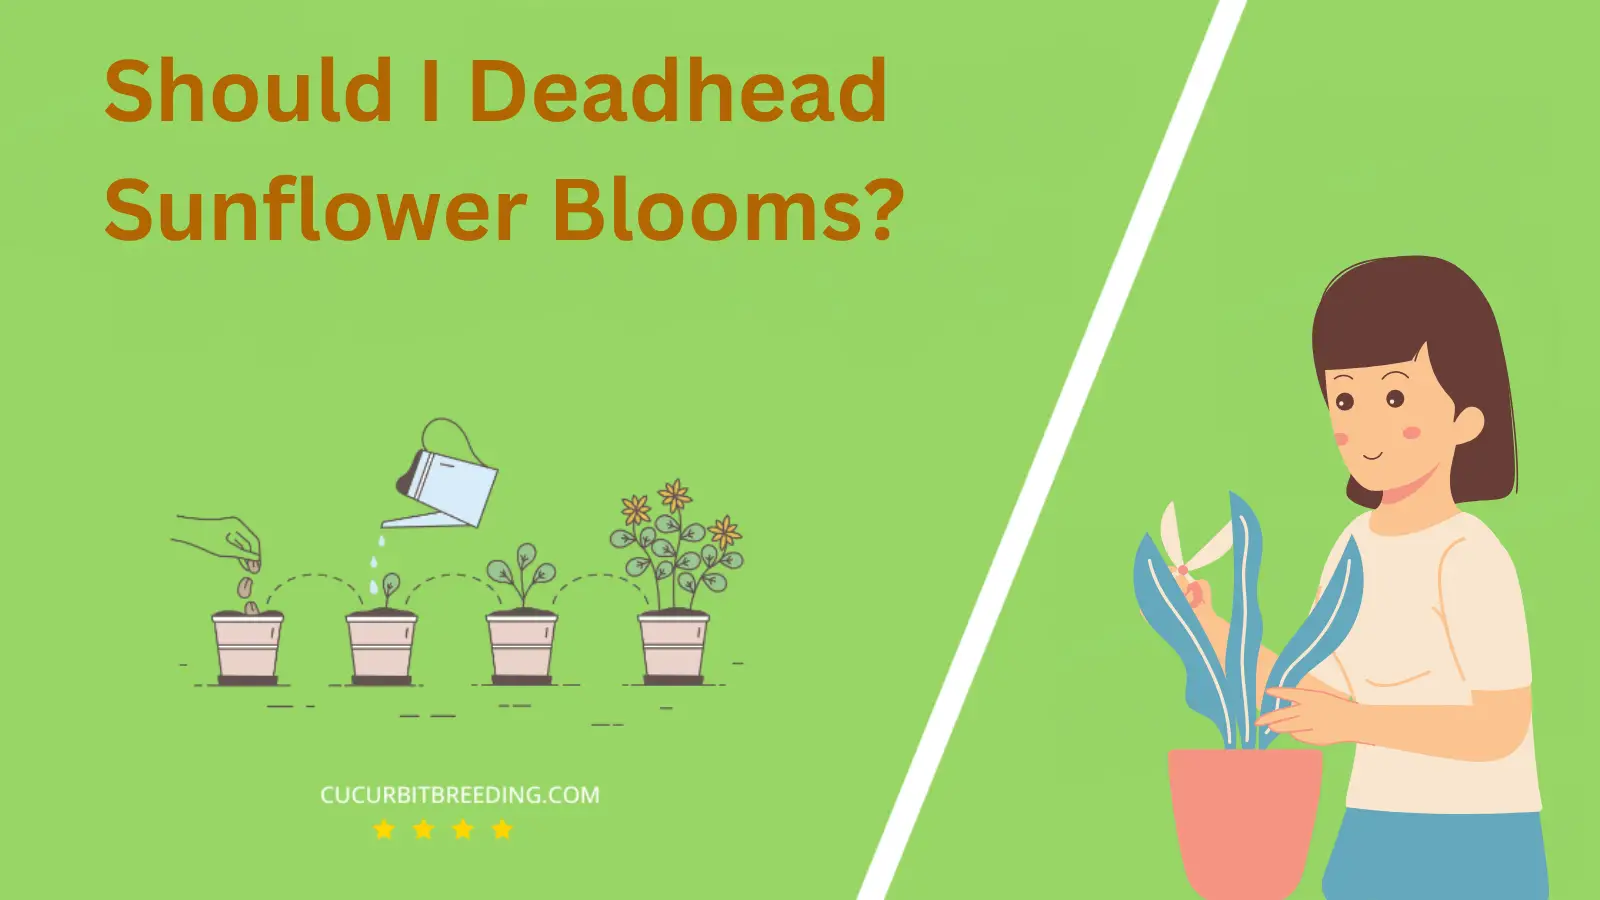 Should I Deadhead Sunflower Blooms?